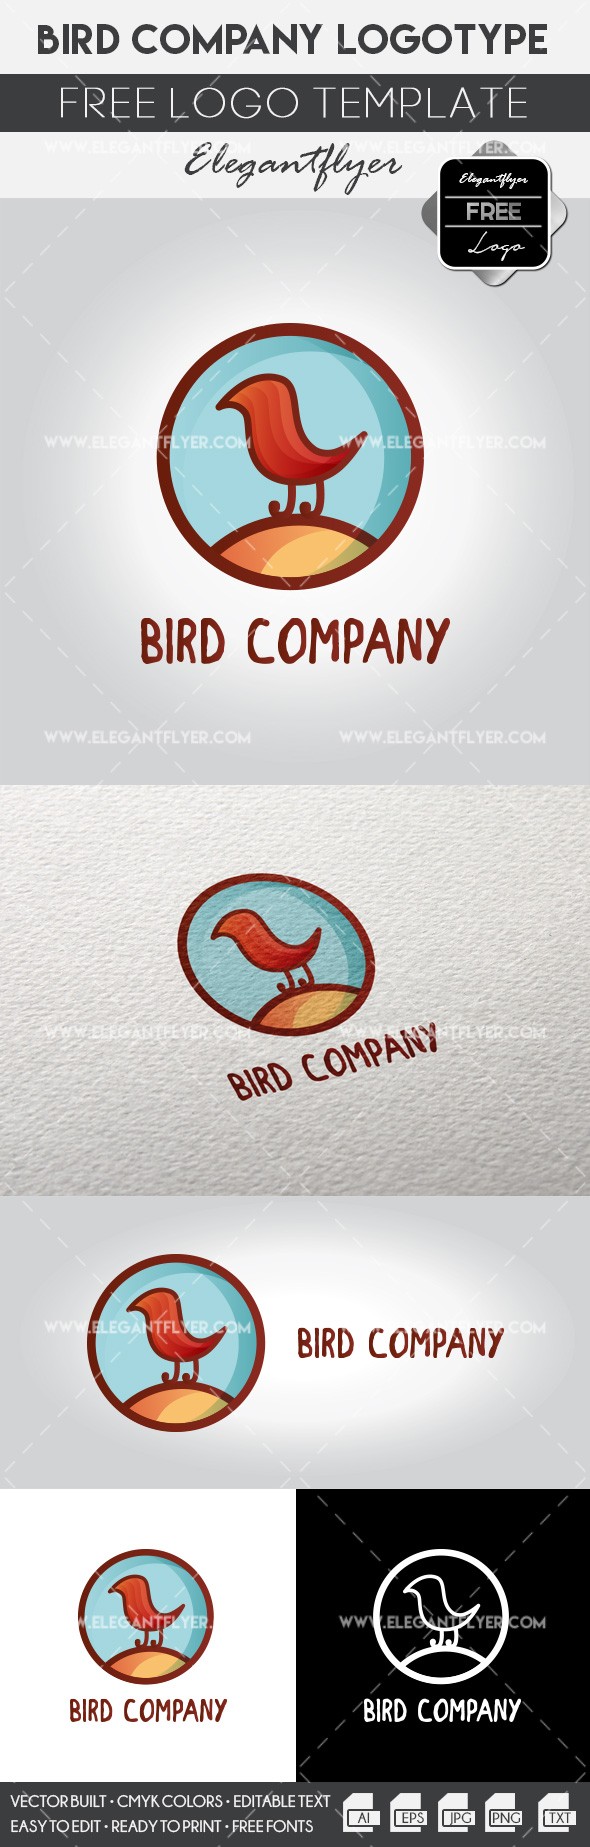 Compañía de aves. by ElegantFlyer